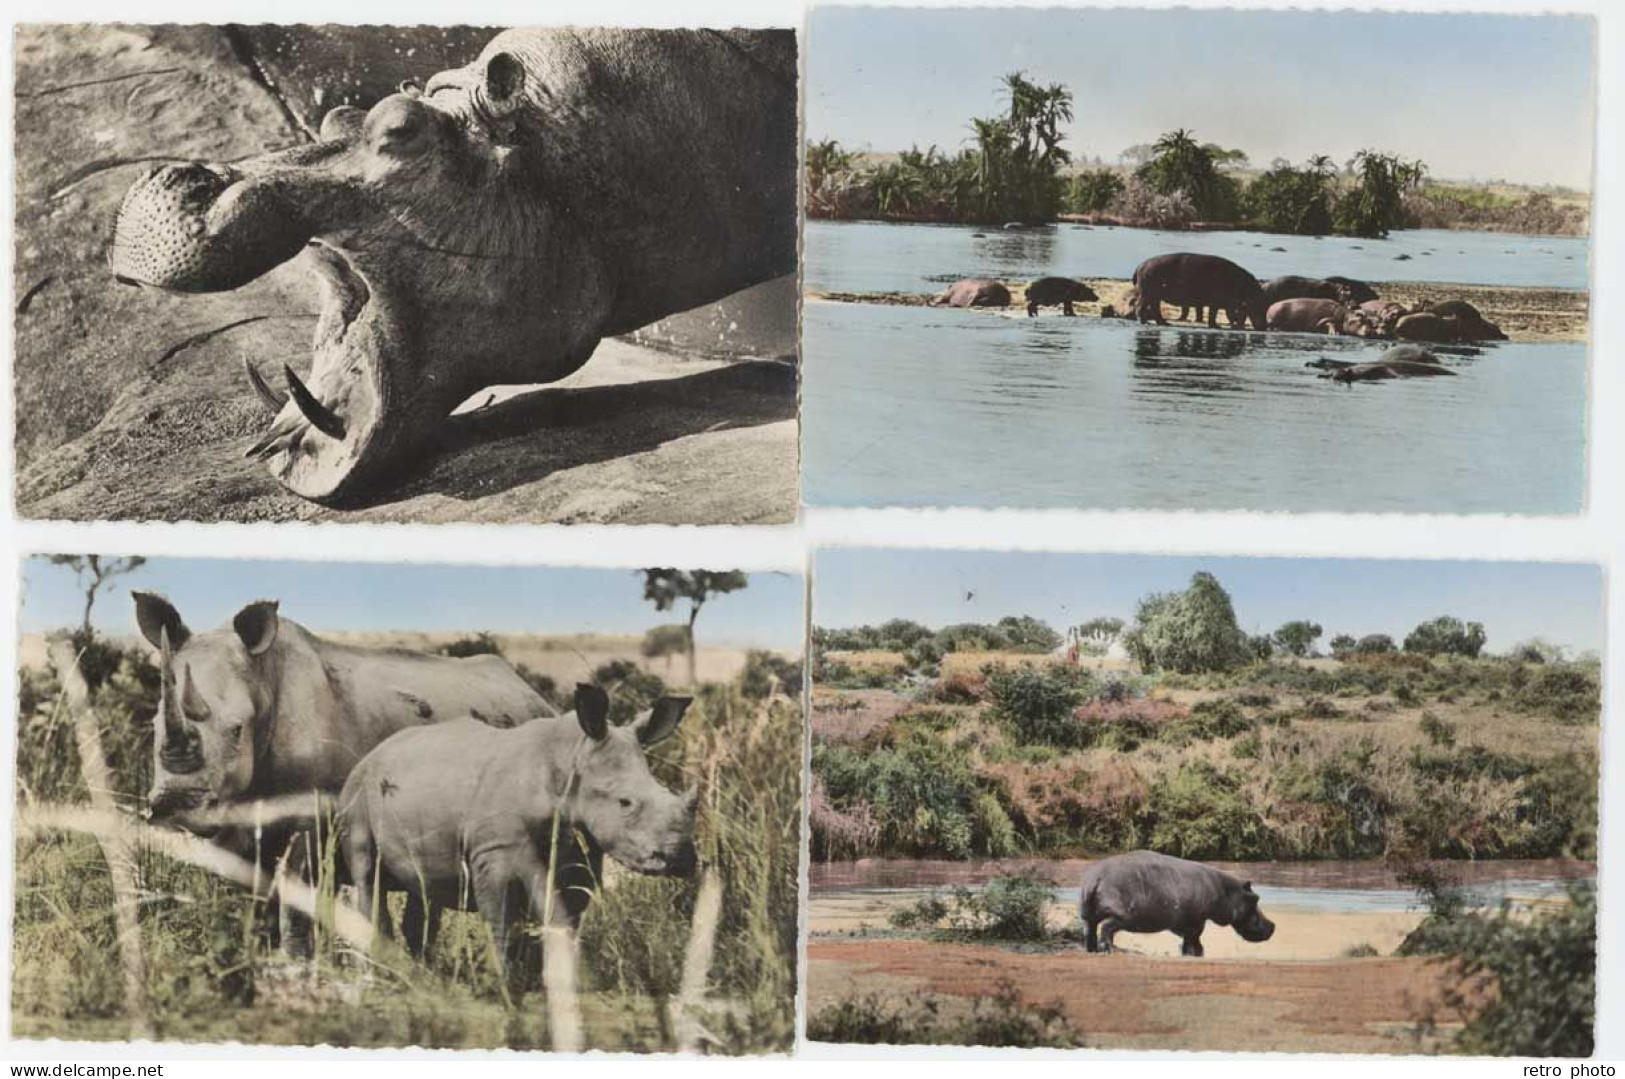 4 Cpsm Faune Africaine - Hippopotame, Rhinocéros ......  (AN) - Flusspferde